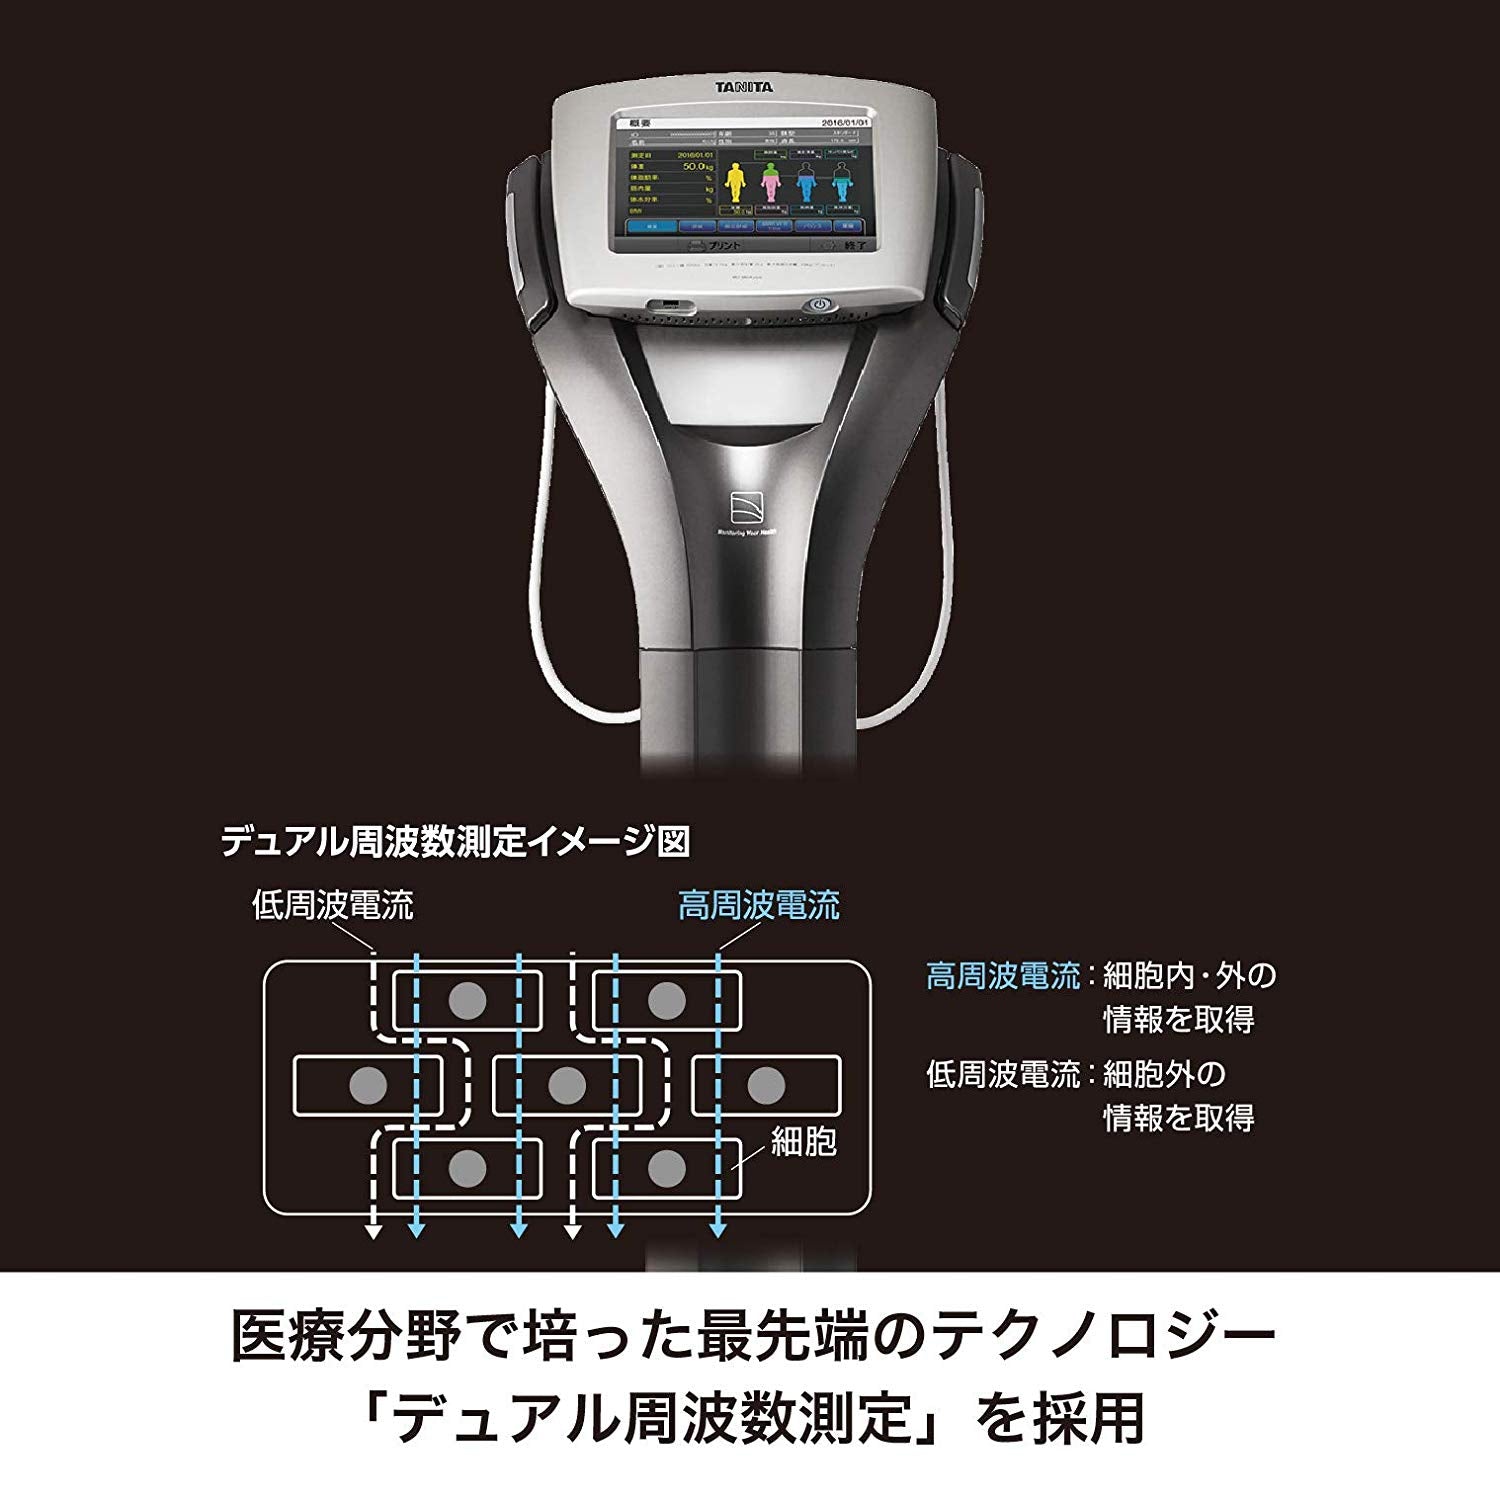 TANITA - 【新品】タニタ RD-800-BK デュアルタイプ体組成計の+jci